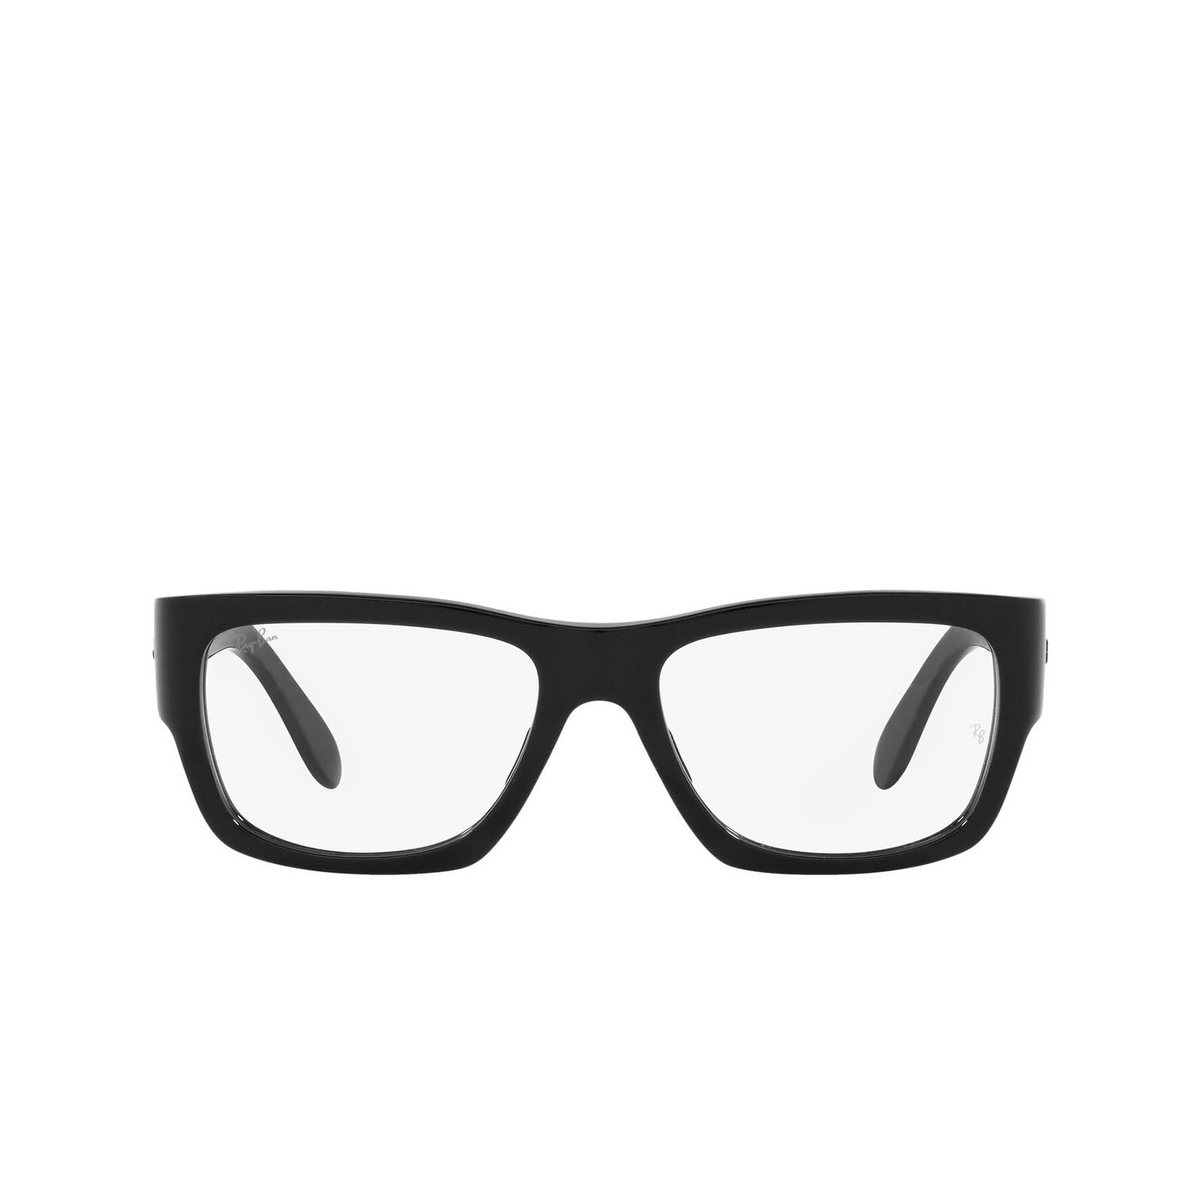 Ray-Ban NOMAD WAYFARER Eyeglasses 2000 Black - front view